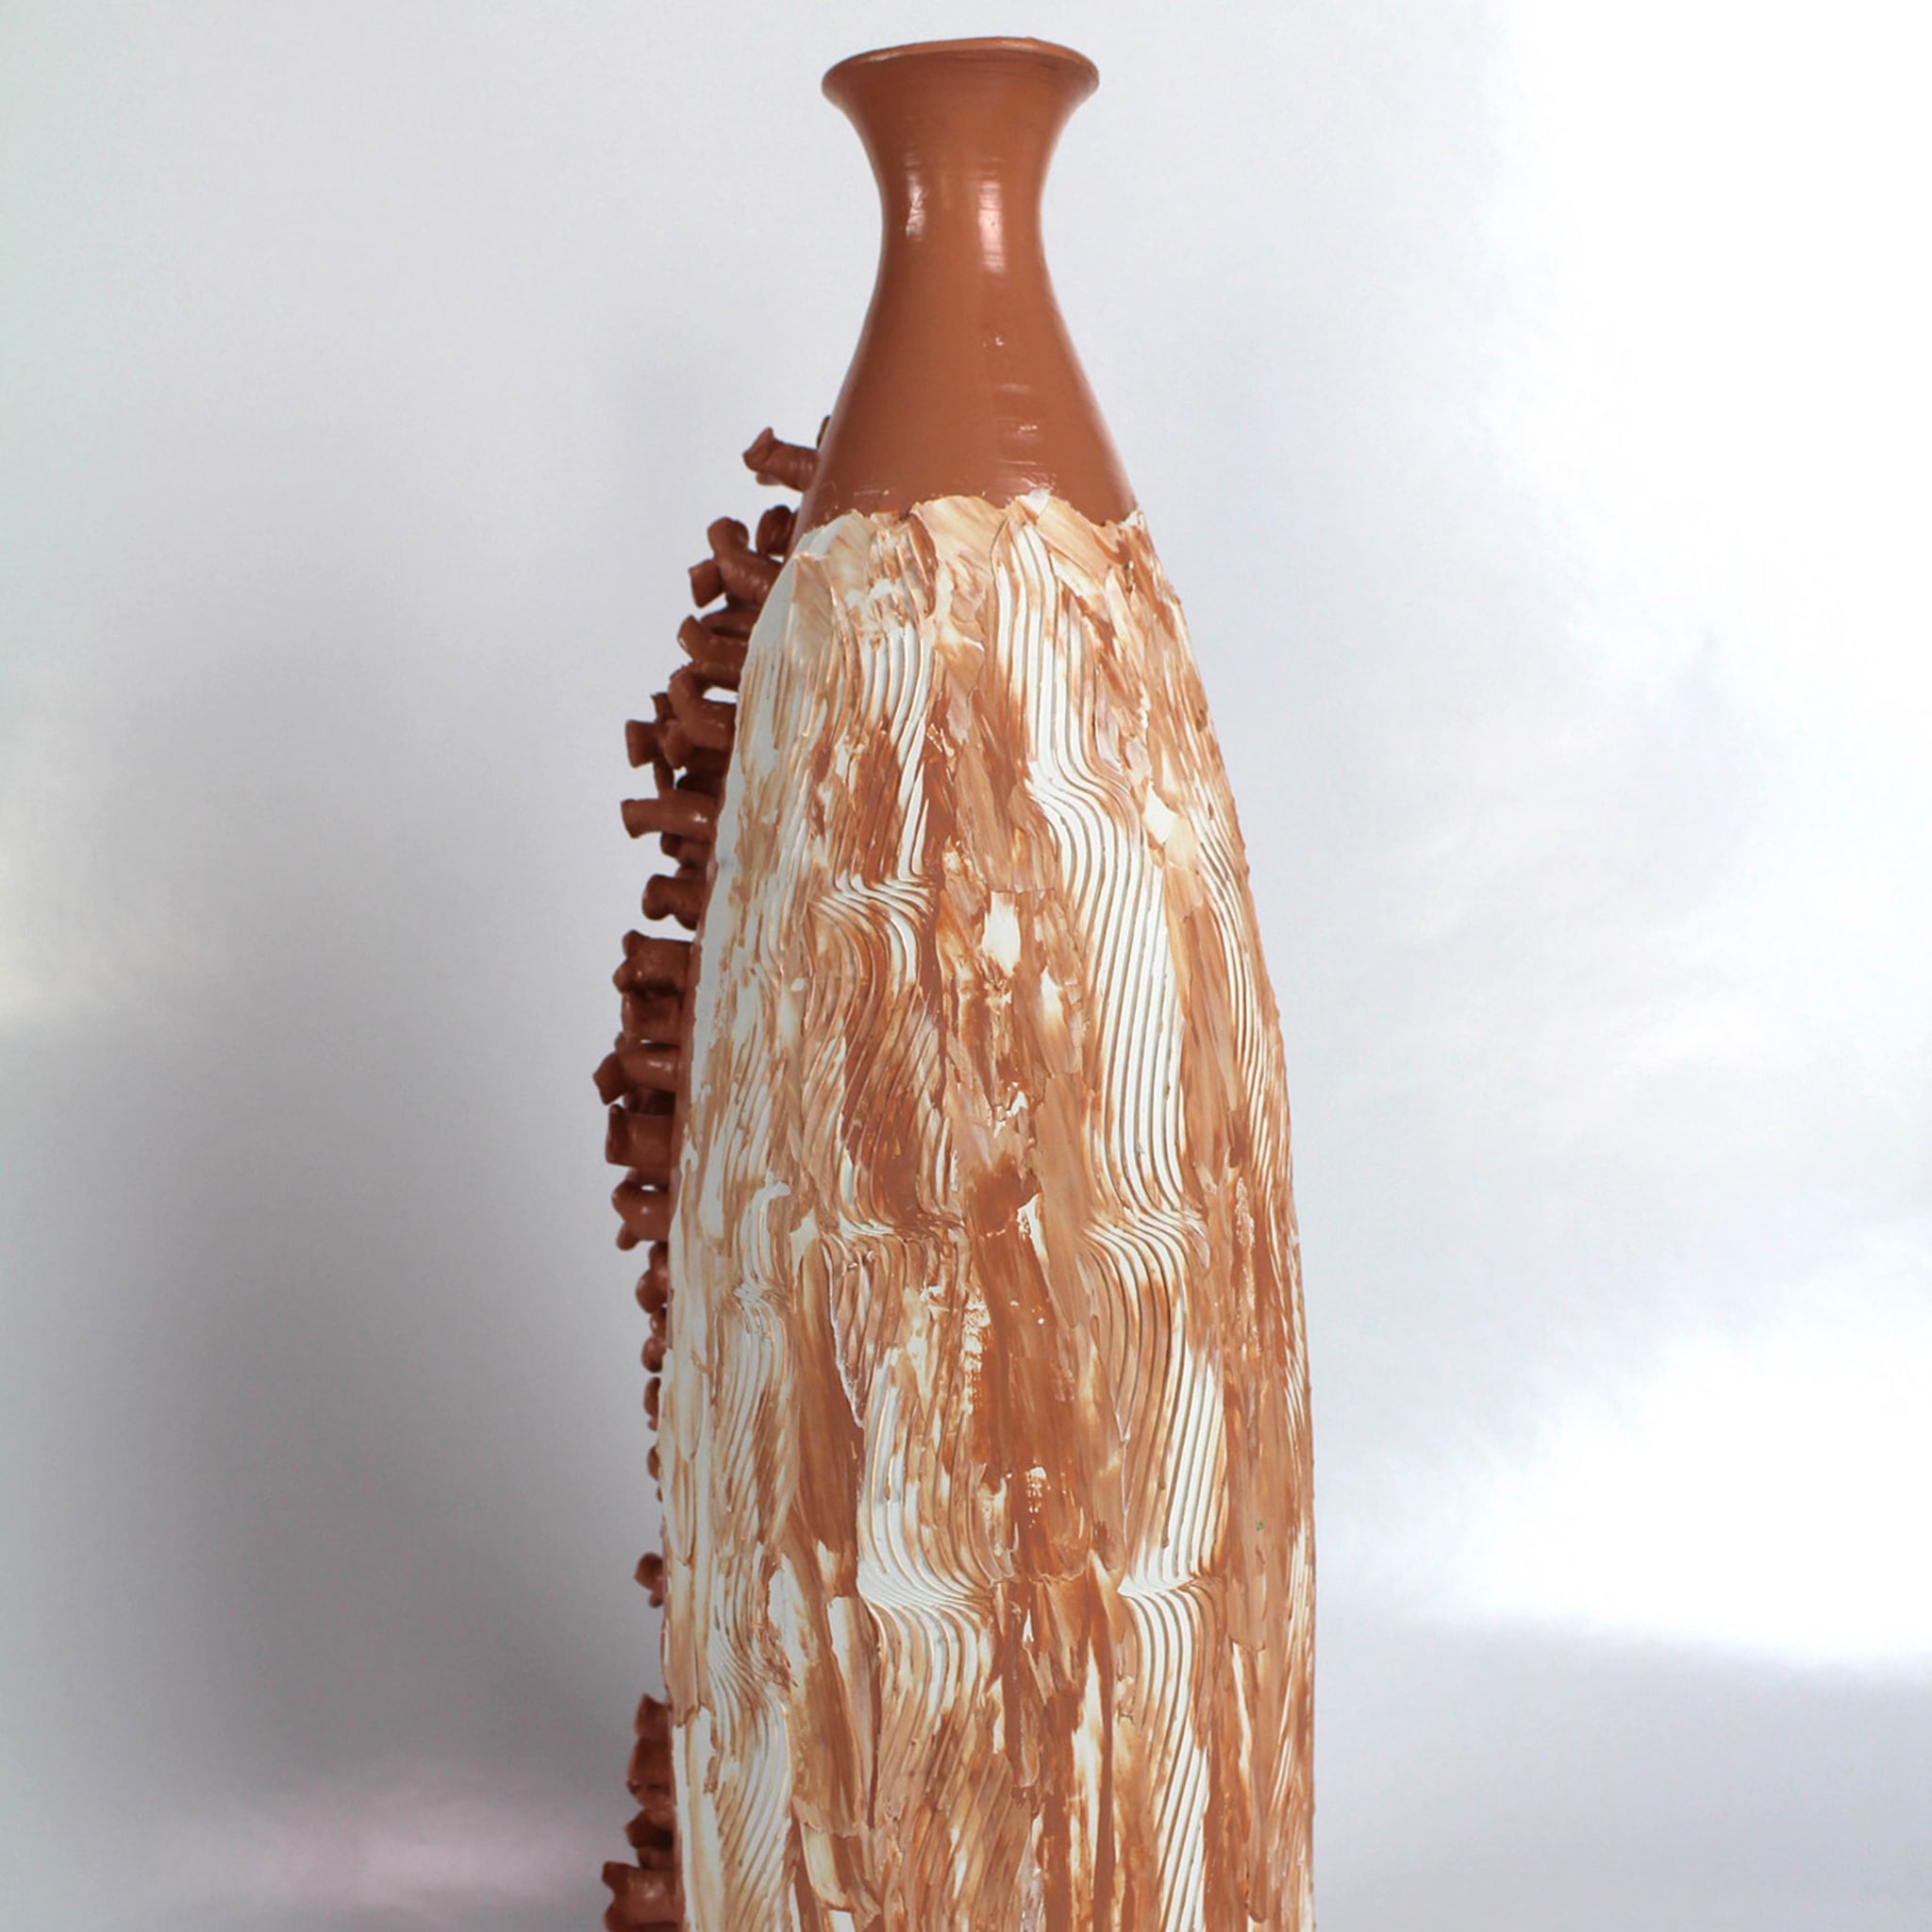 Terracotta Vase 26 by Mascia Meccani - Alternative view 1